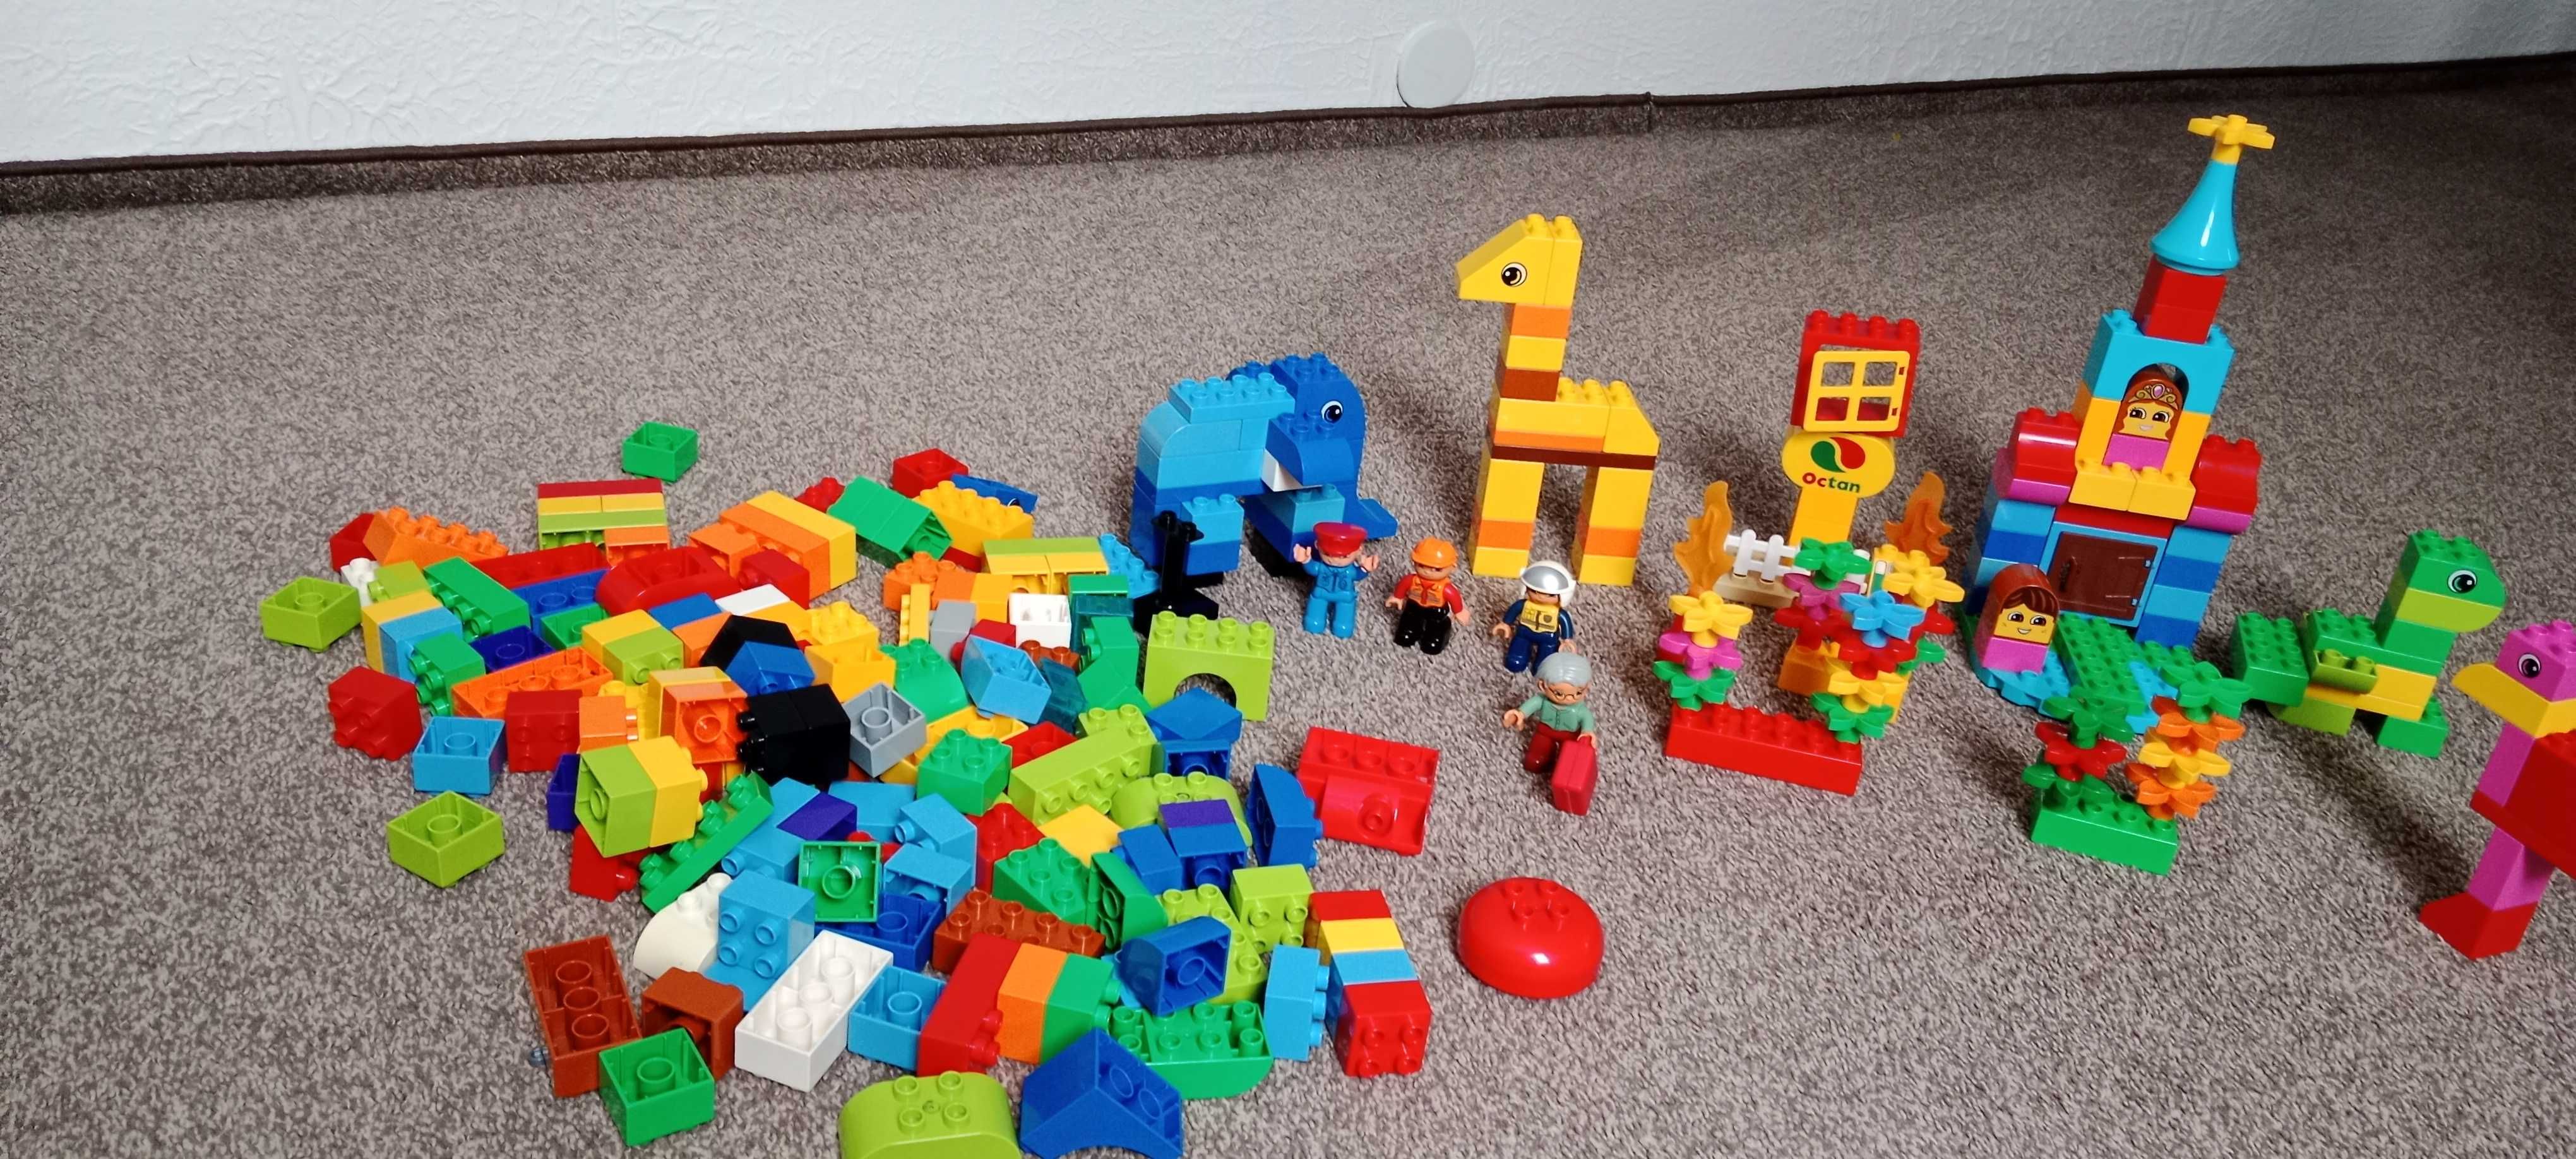 Klocki LEGO Duplo ponad 250 szt